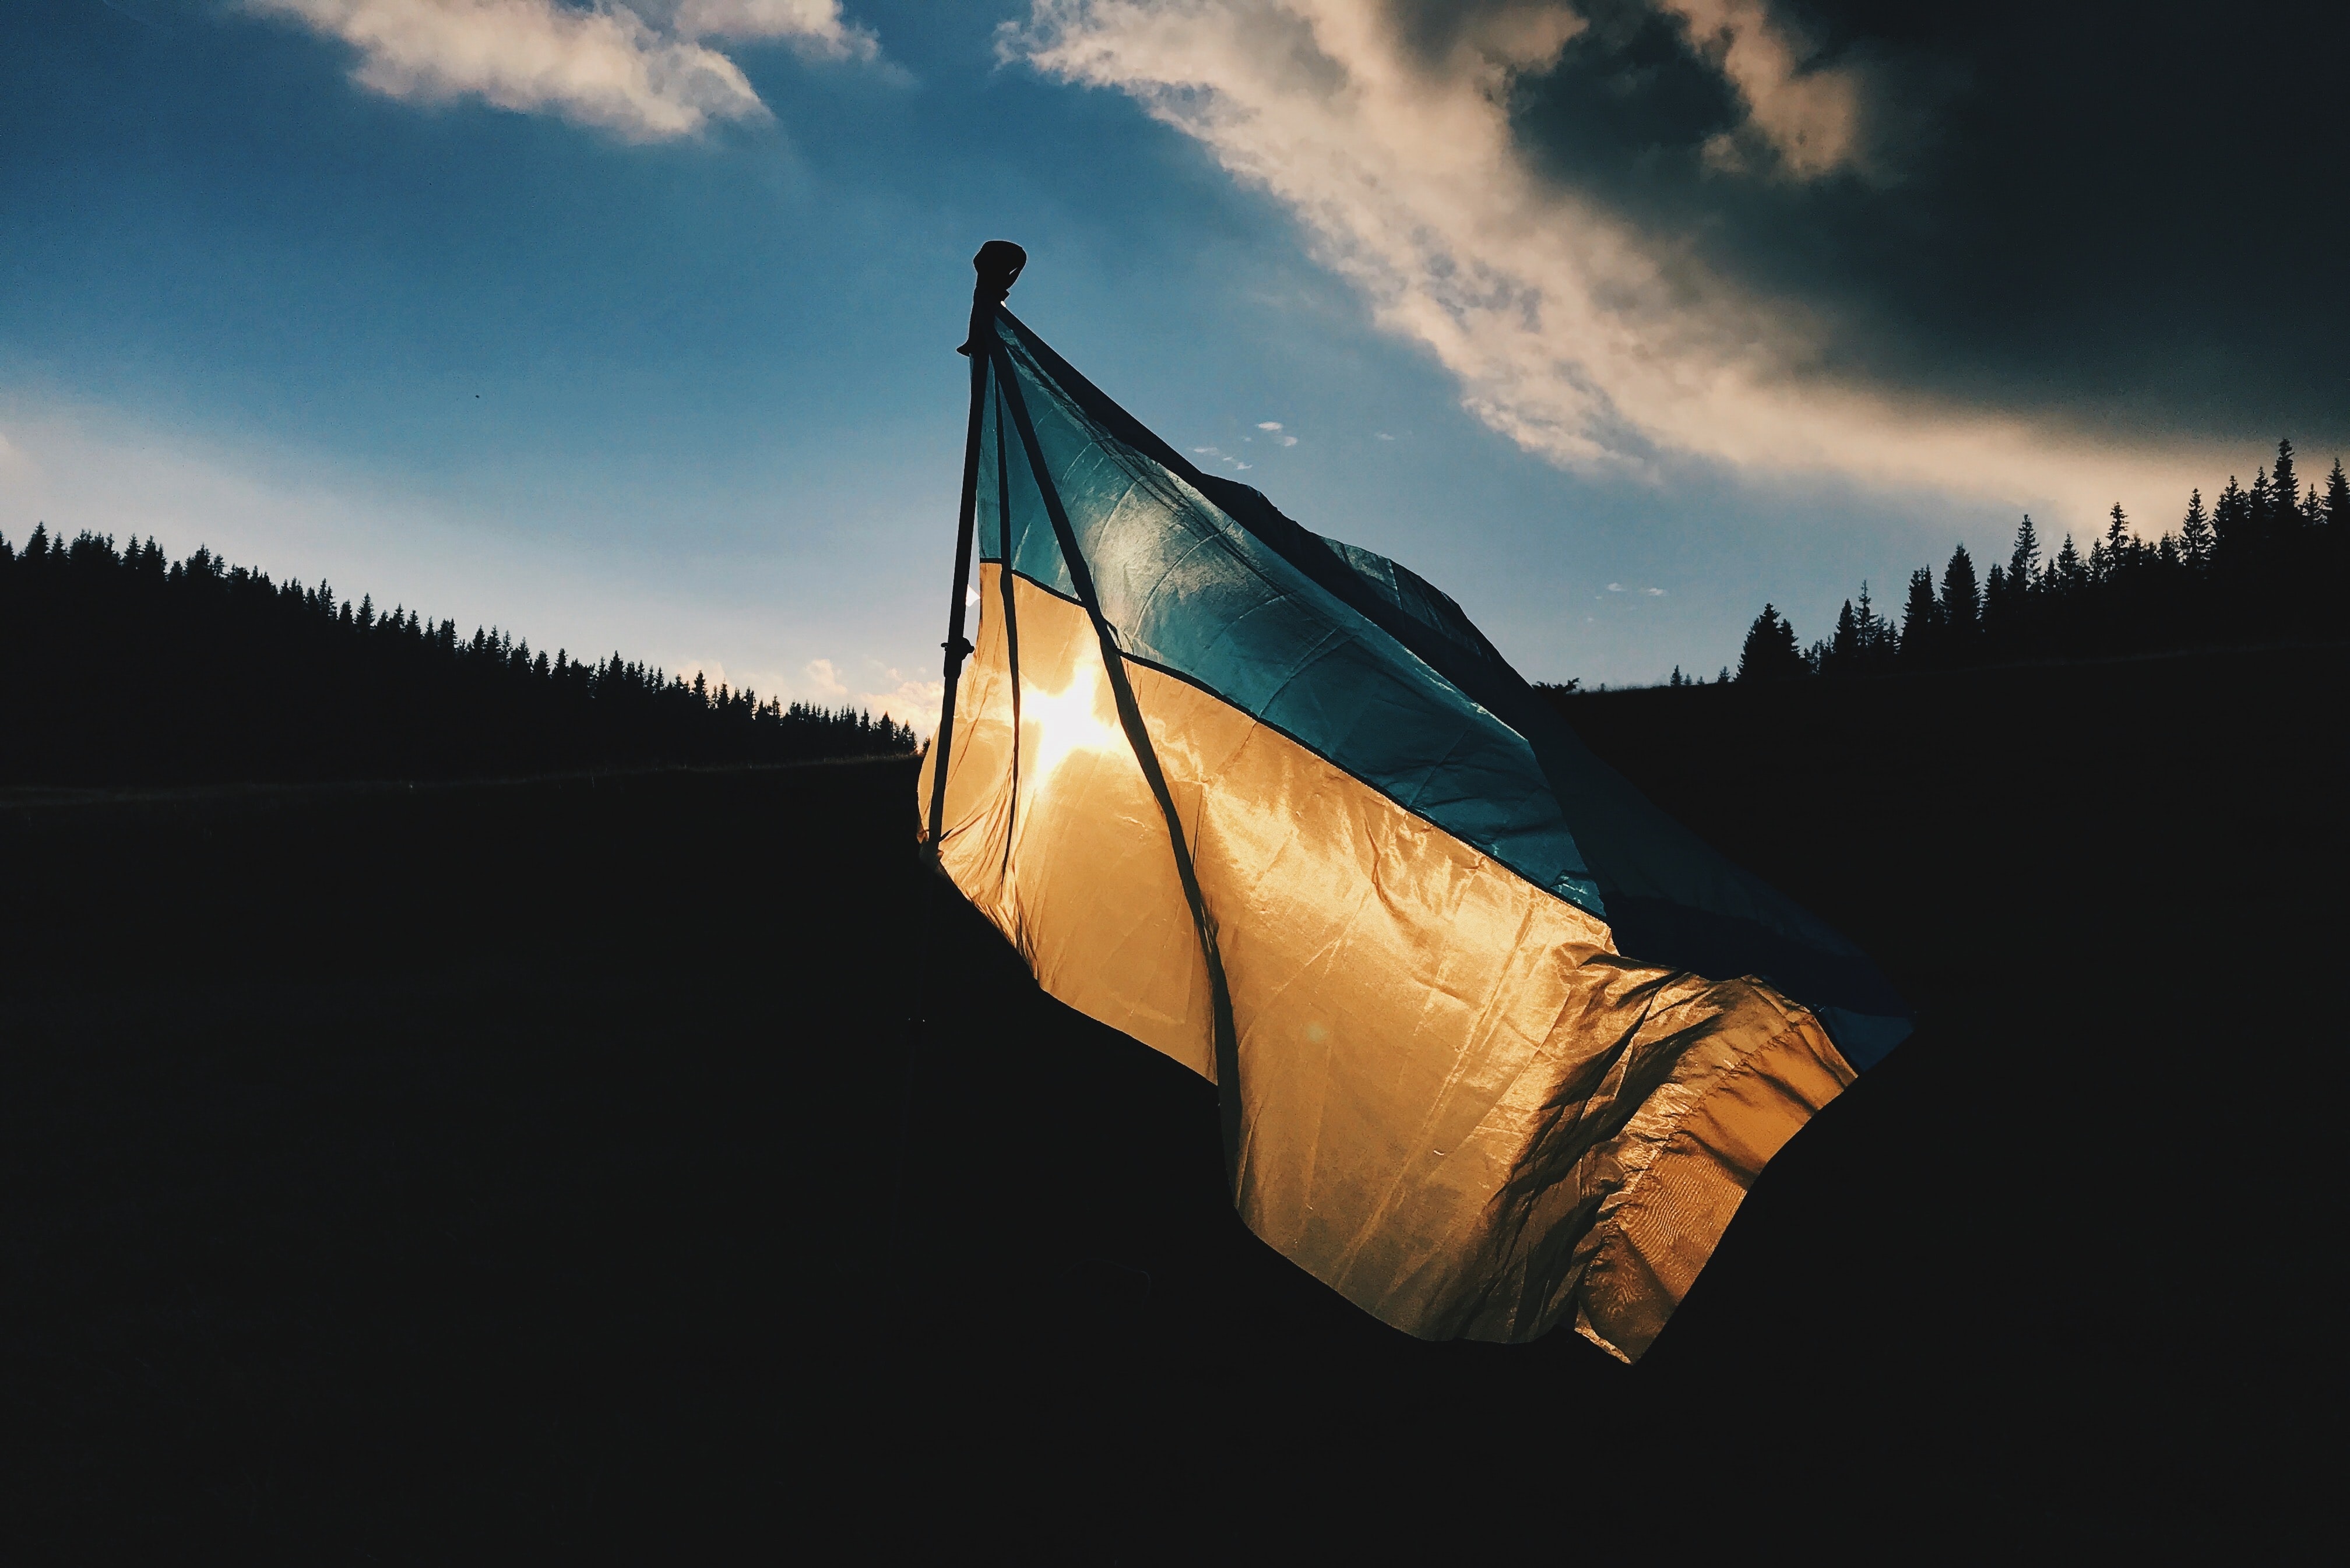 The ukraine flag